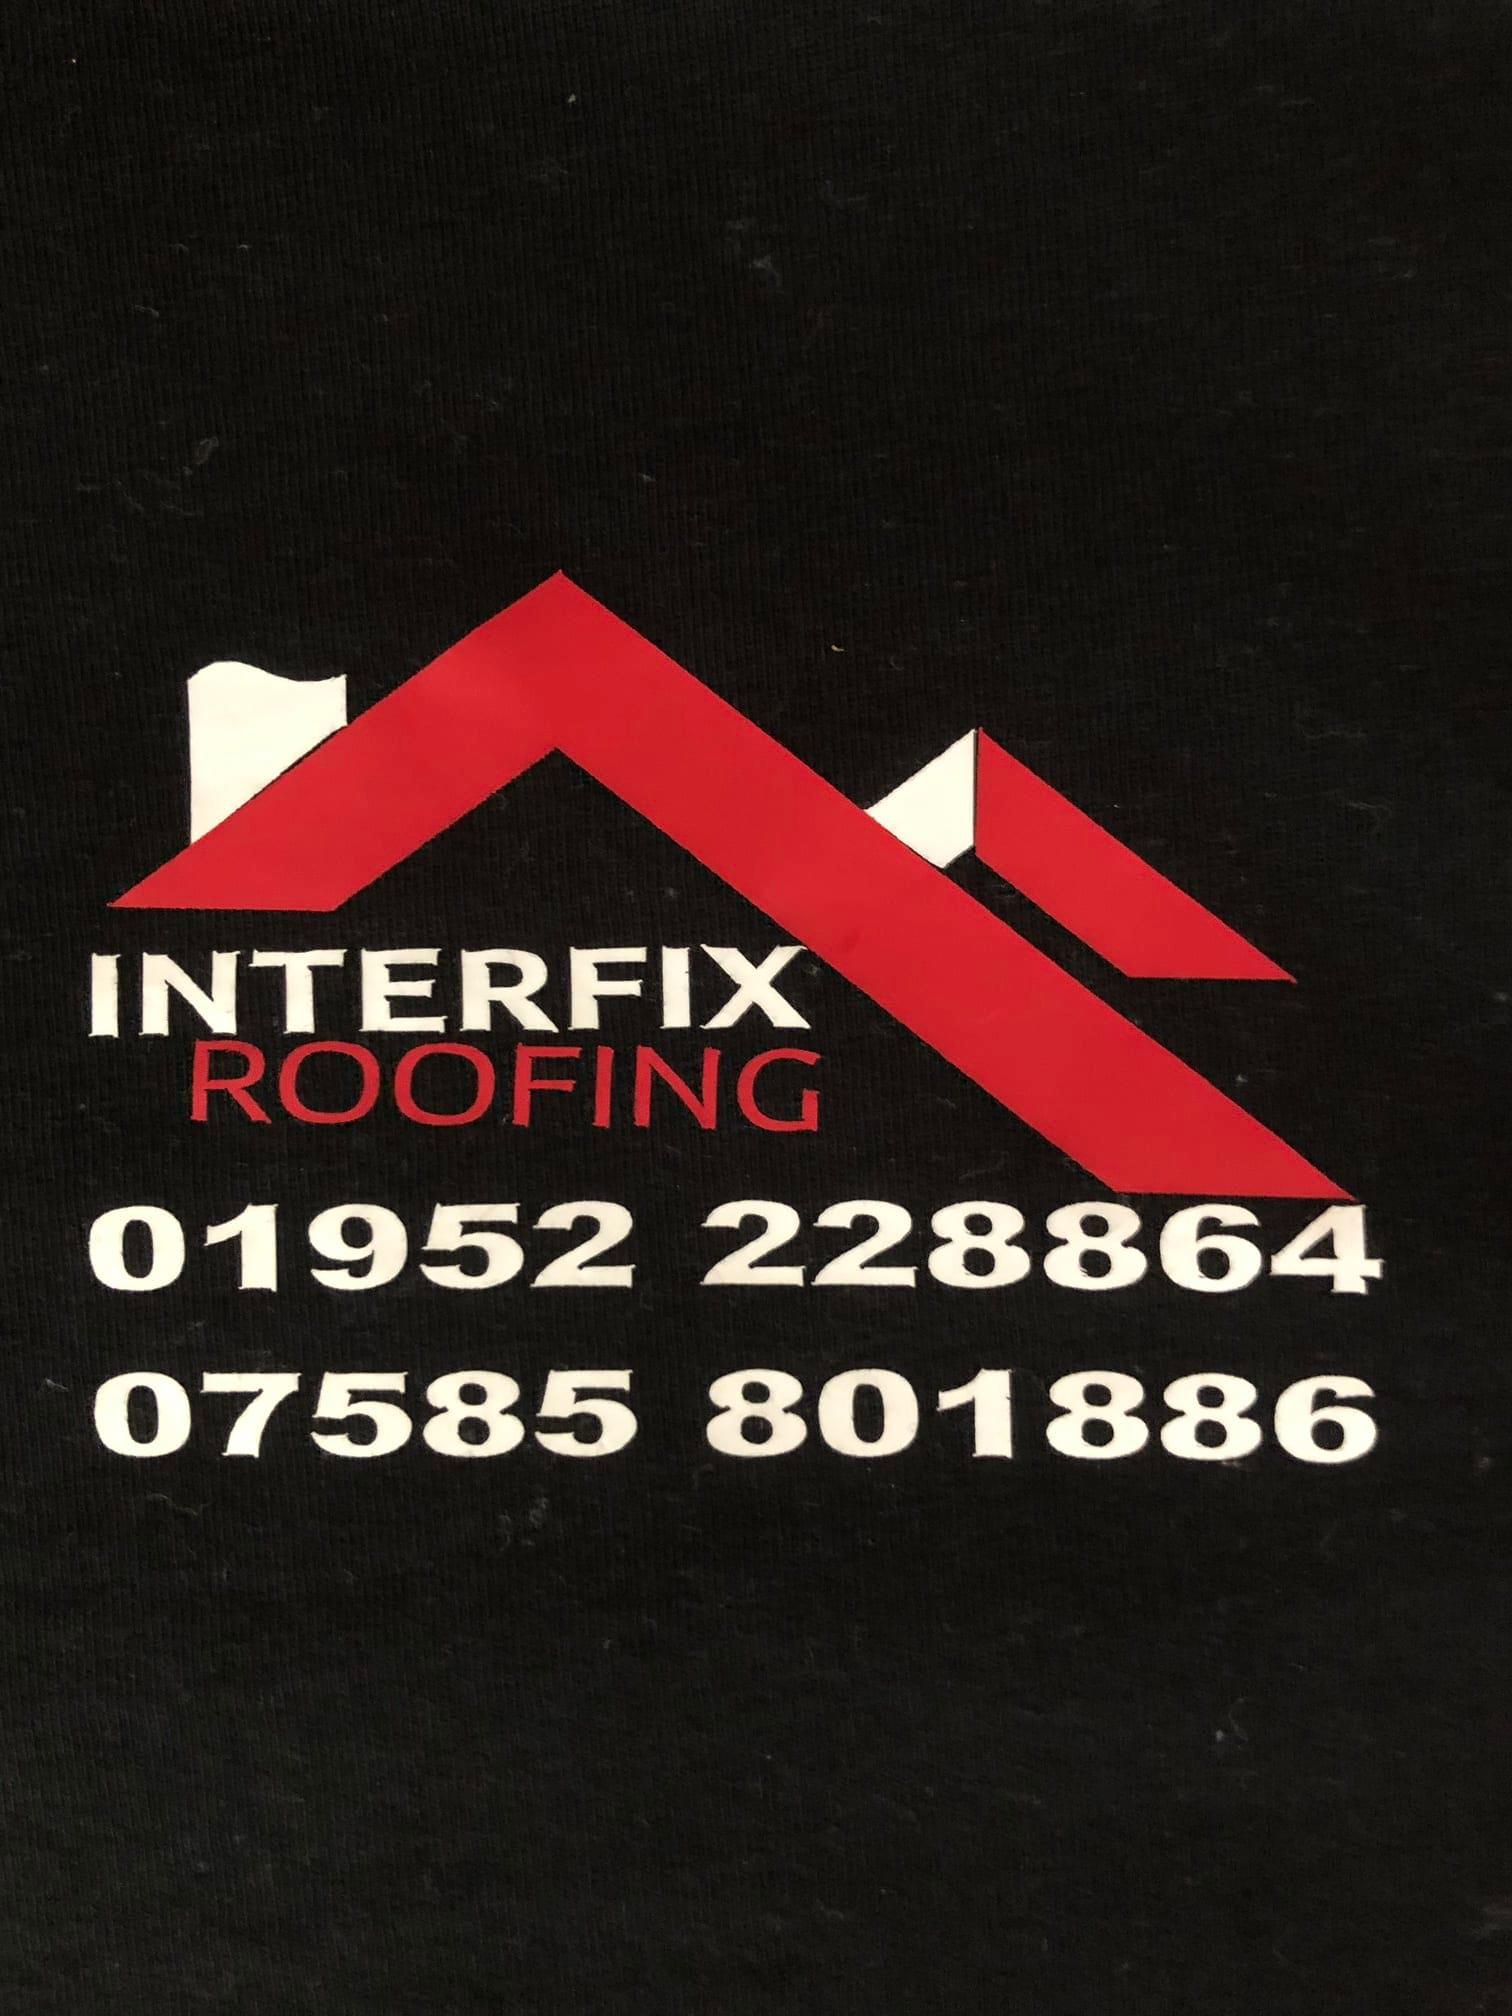 Images Interfix Roofing Ltd